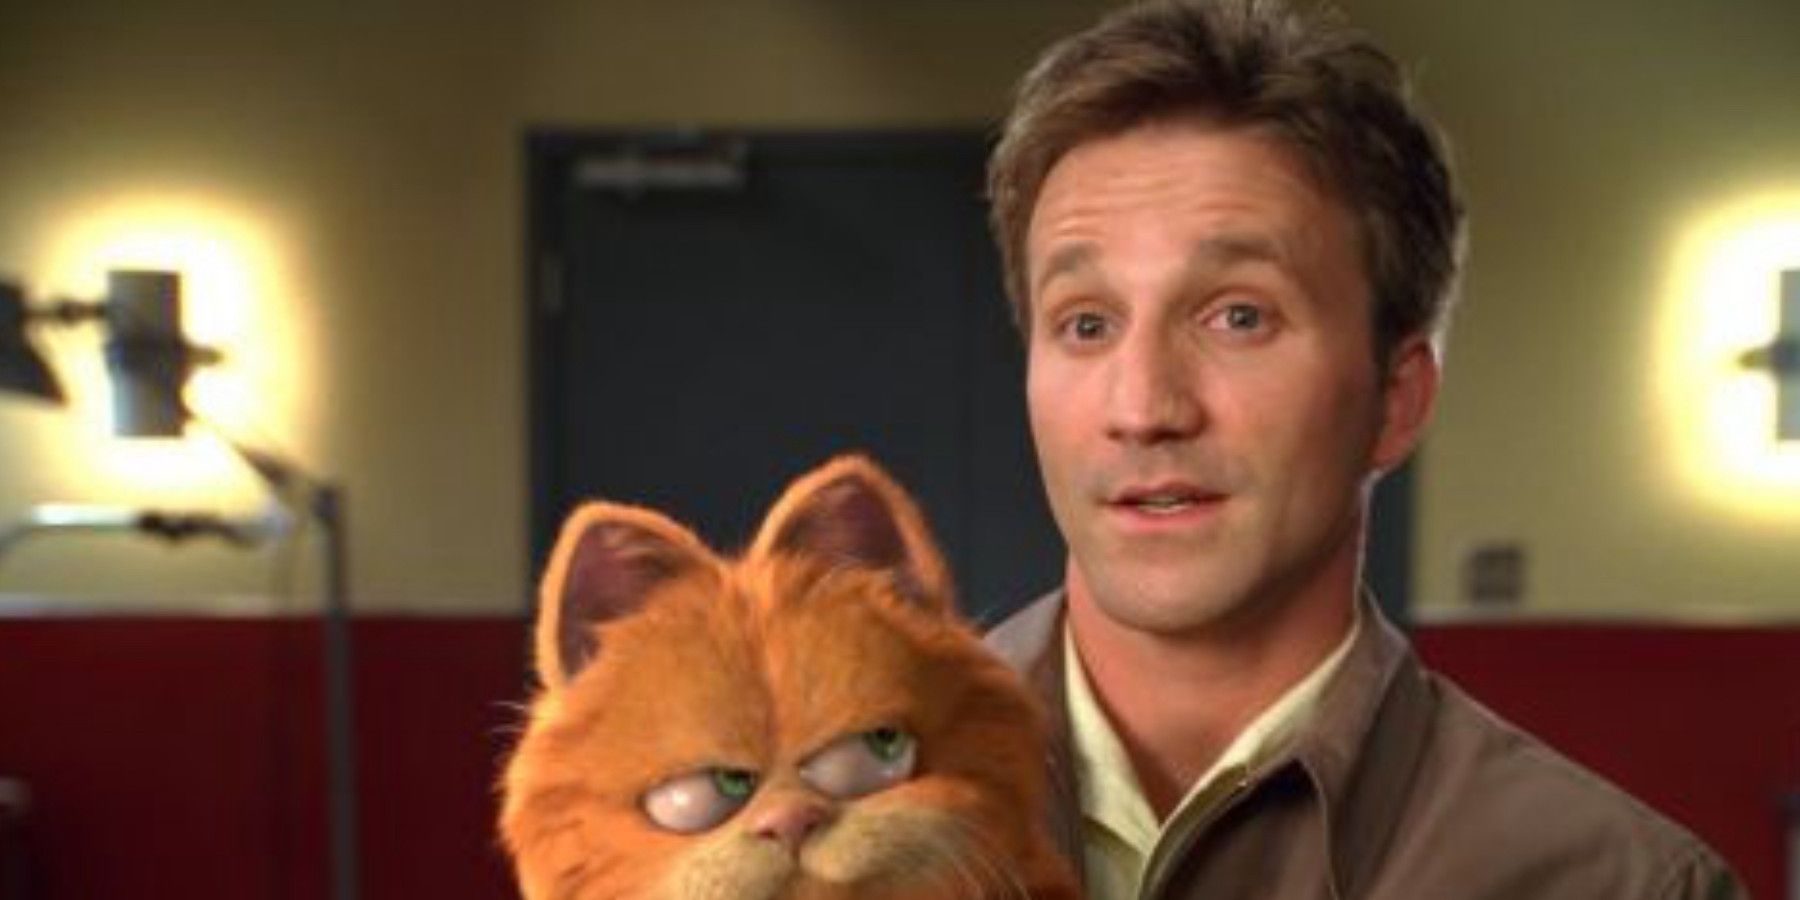 Breckin Meyer as Jon in 2004's Garfield the Movie next to a disgruntled looking CG Garfield